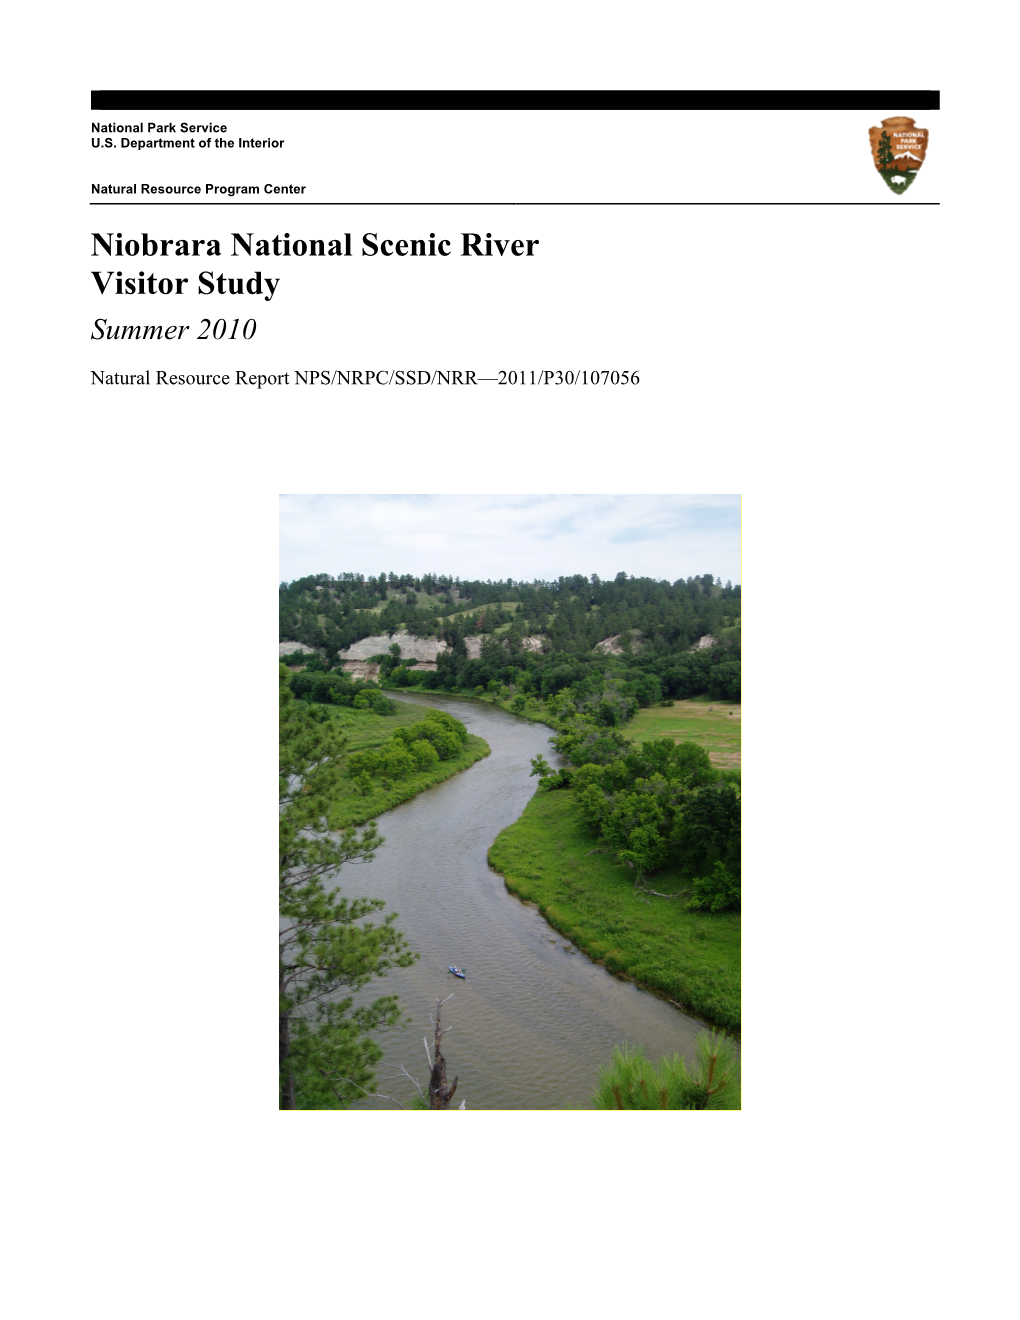 Niobrara National Scenic River Visitor Study Summer 2010